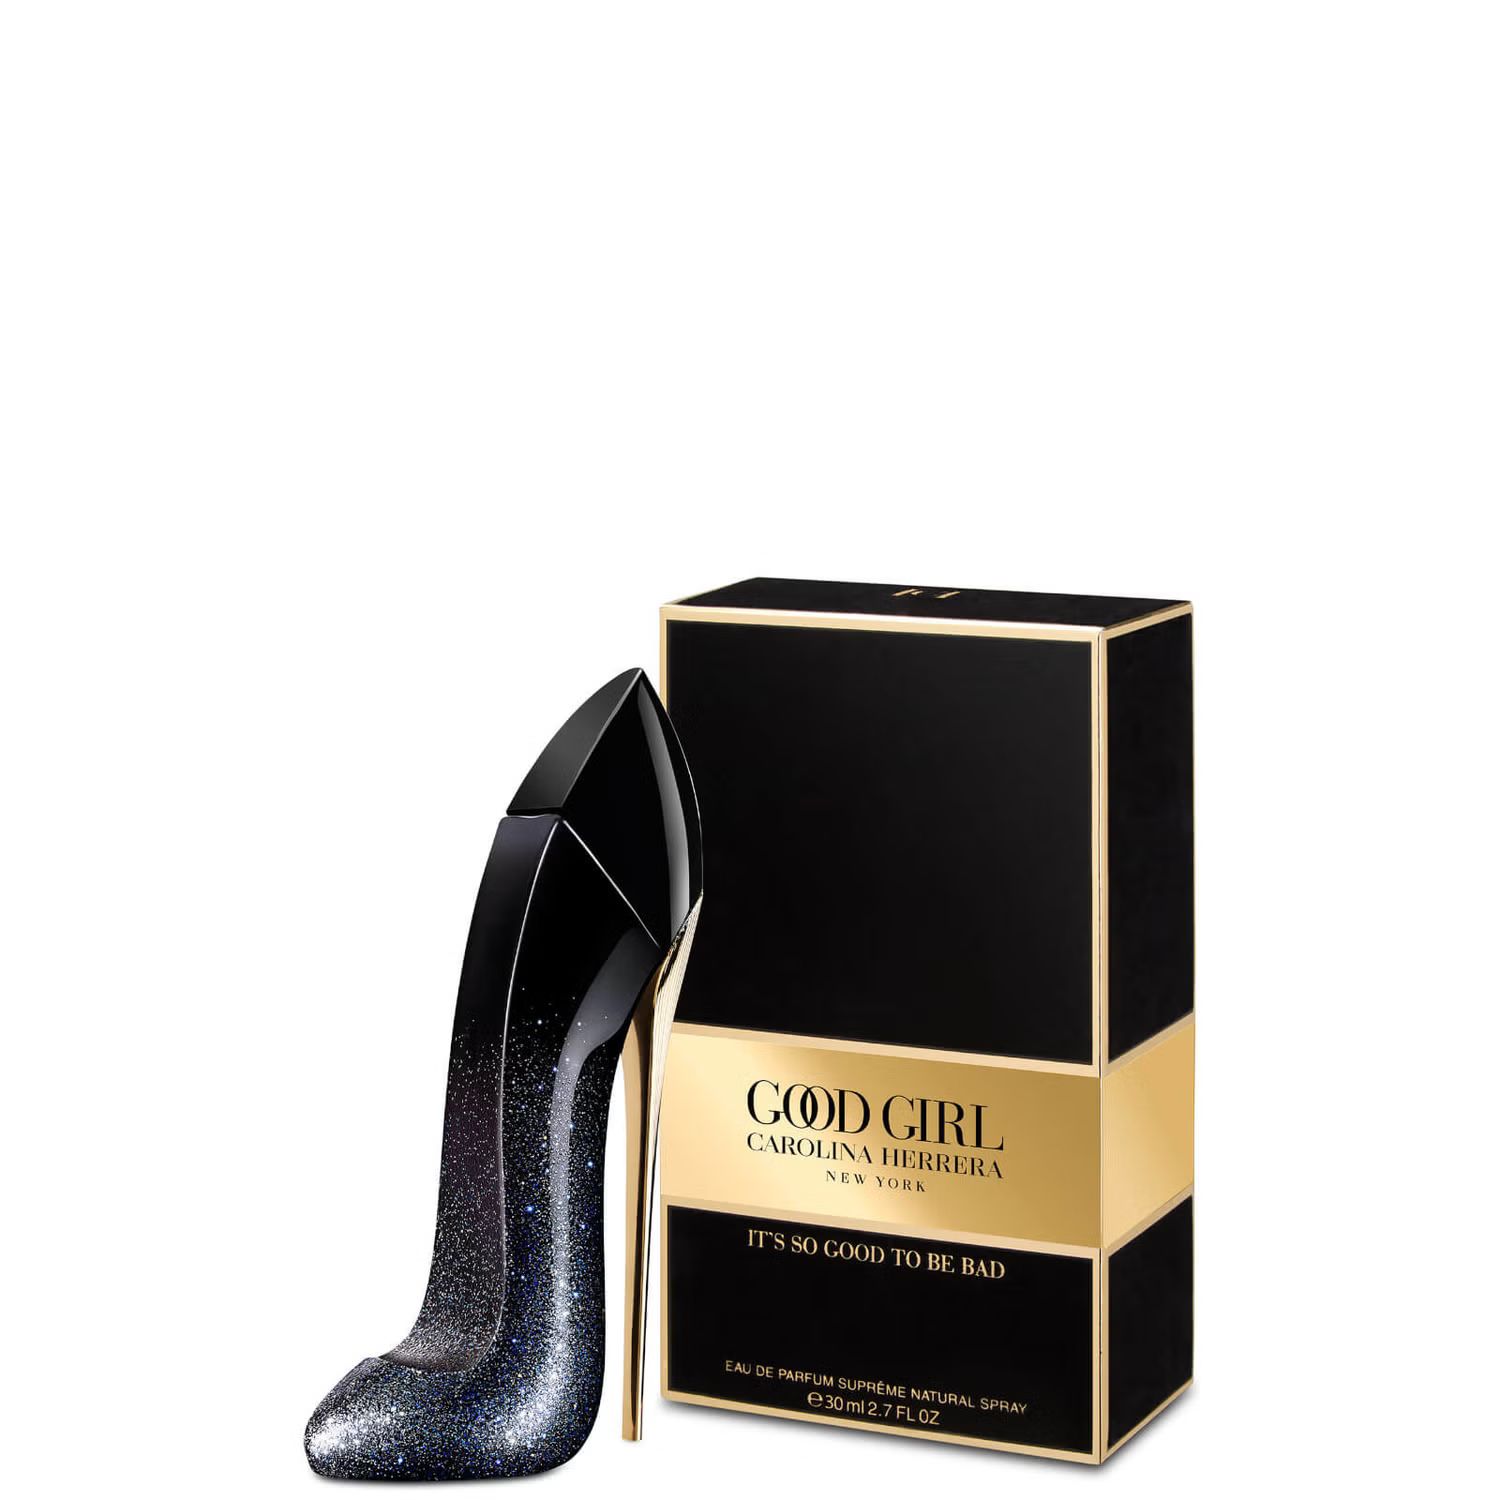 Carolina Herrera Good Girl Eau de Parfum Suprême 30ml | Look Fantastic (UK)